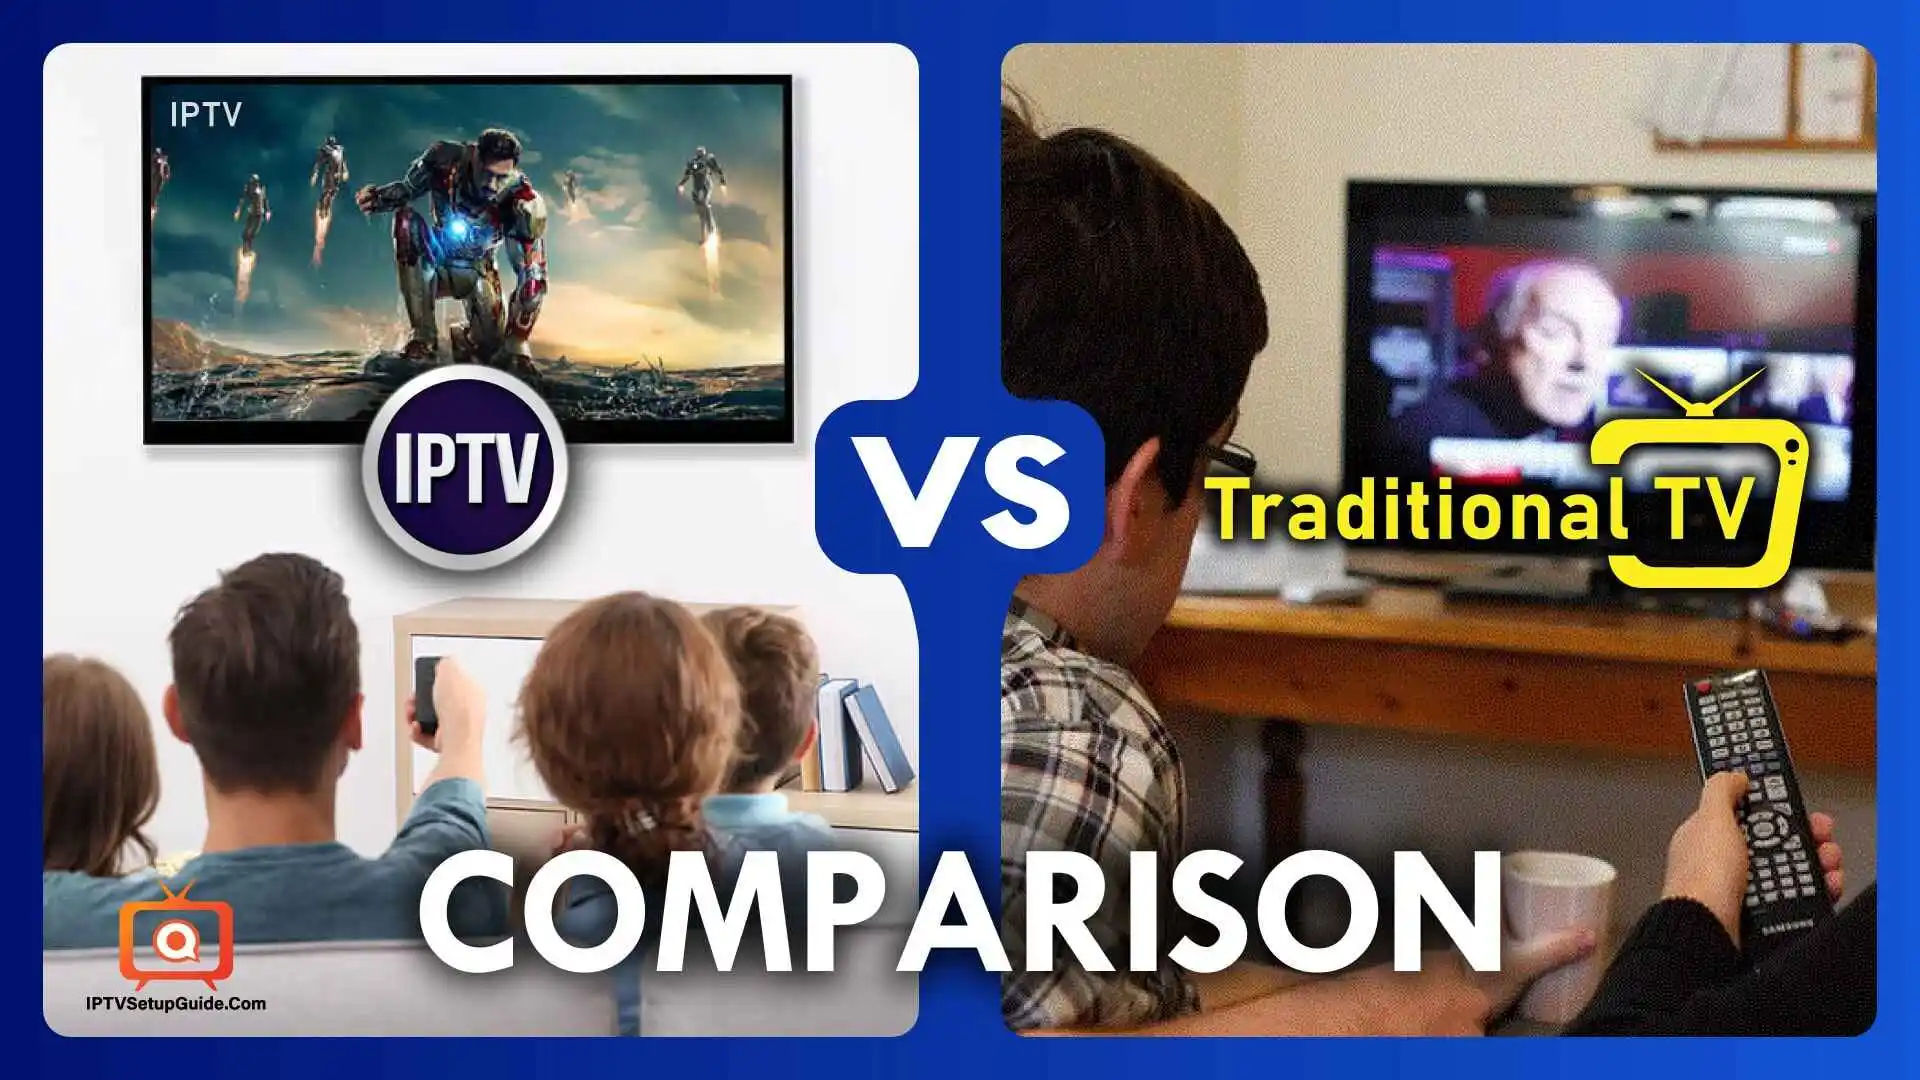 IPTV vs Traditional TV